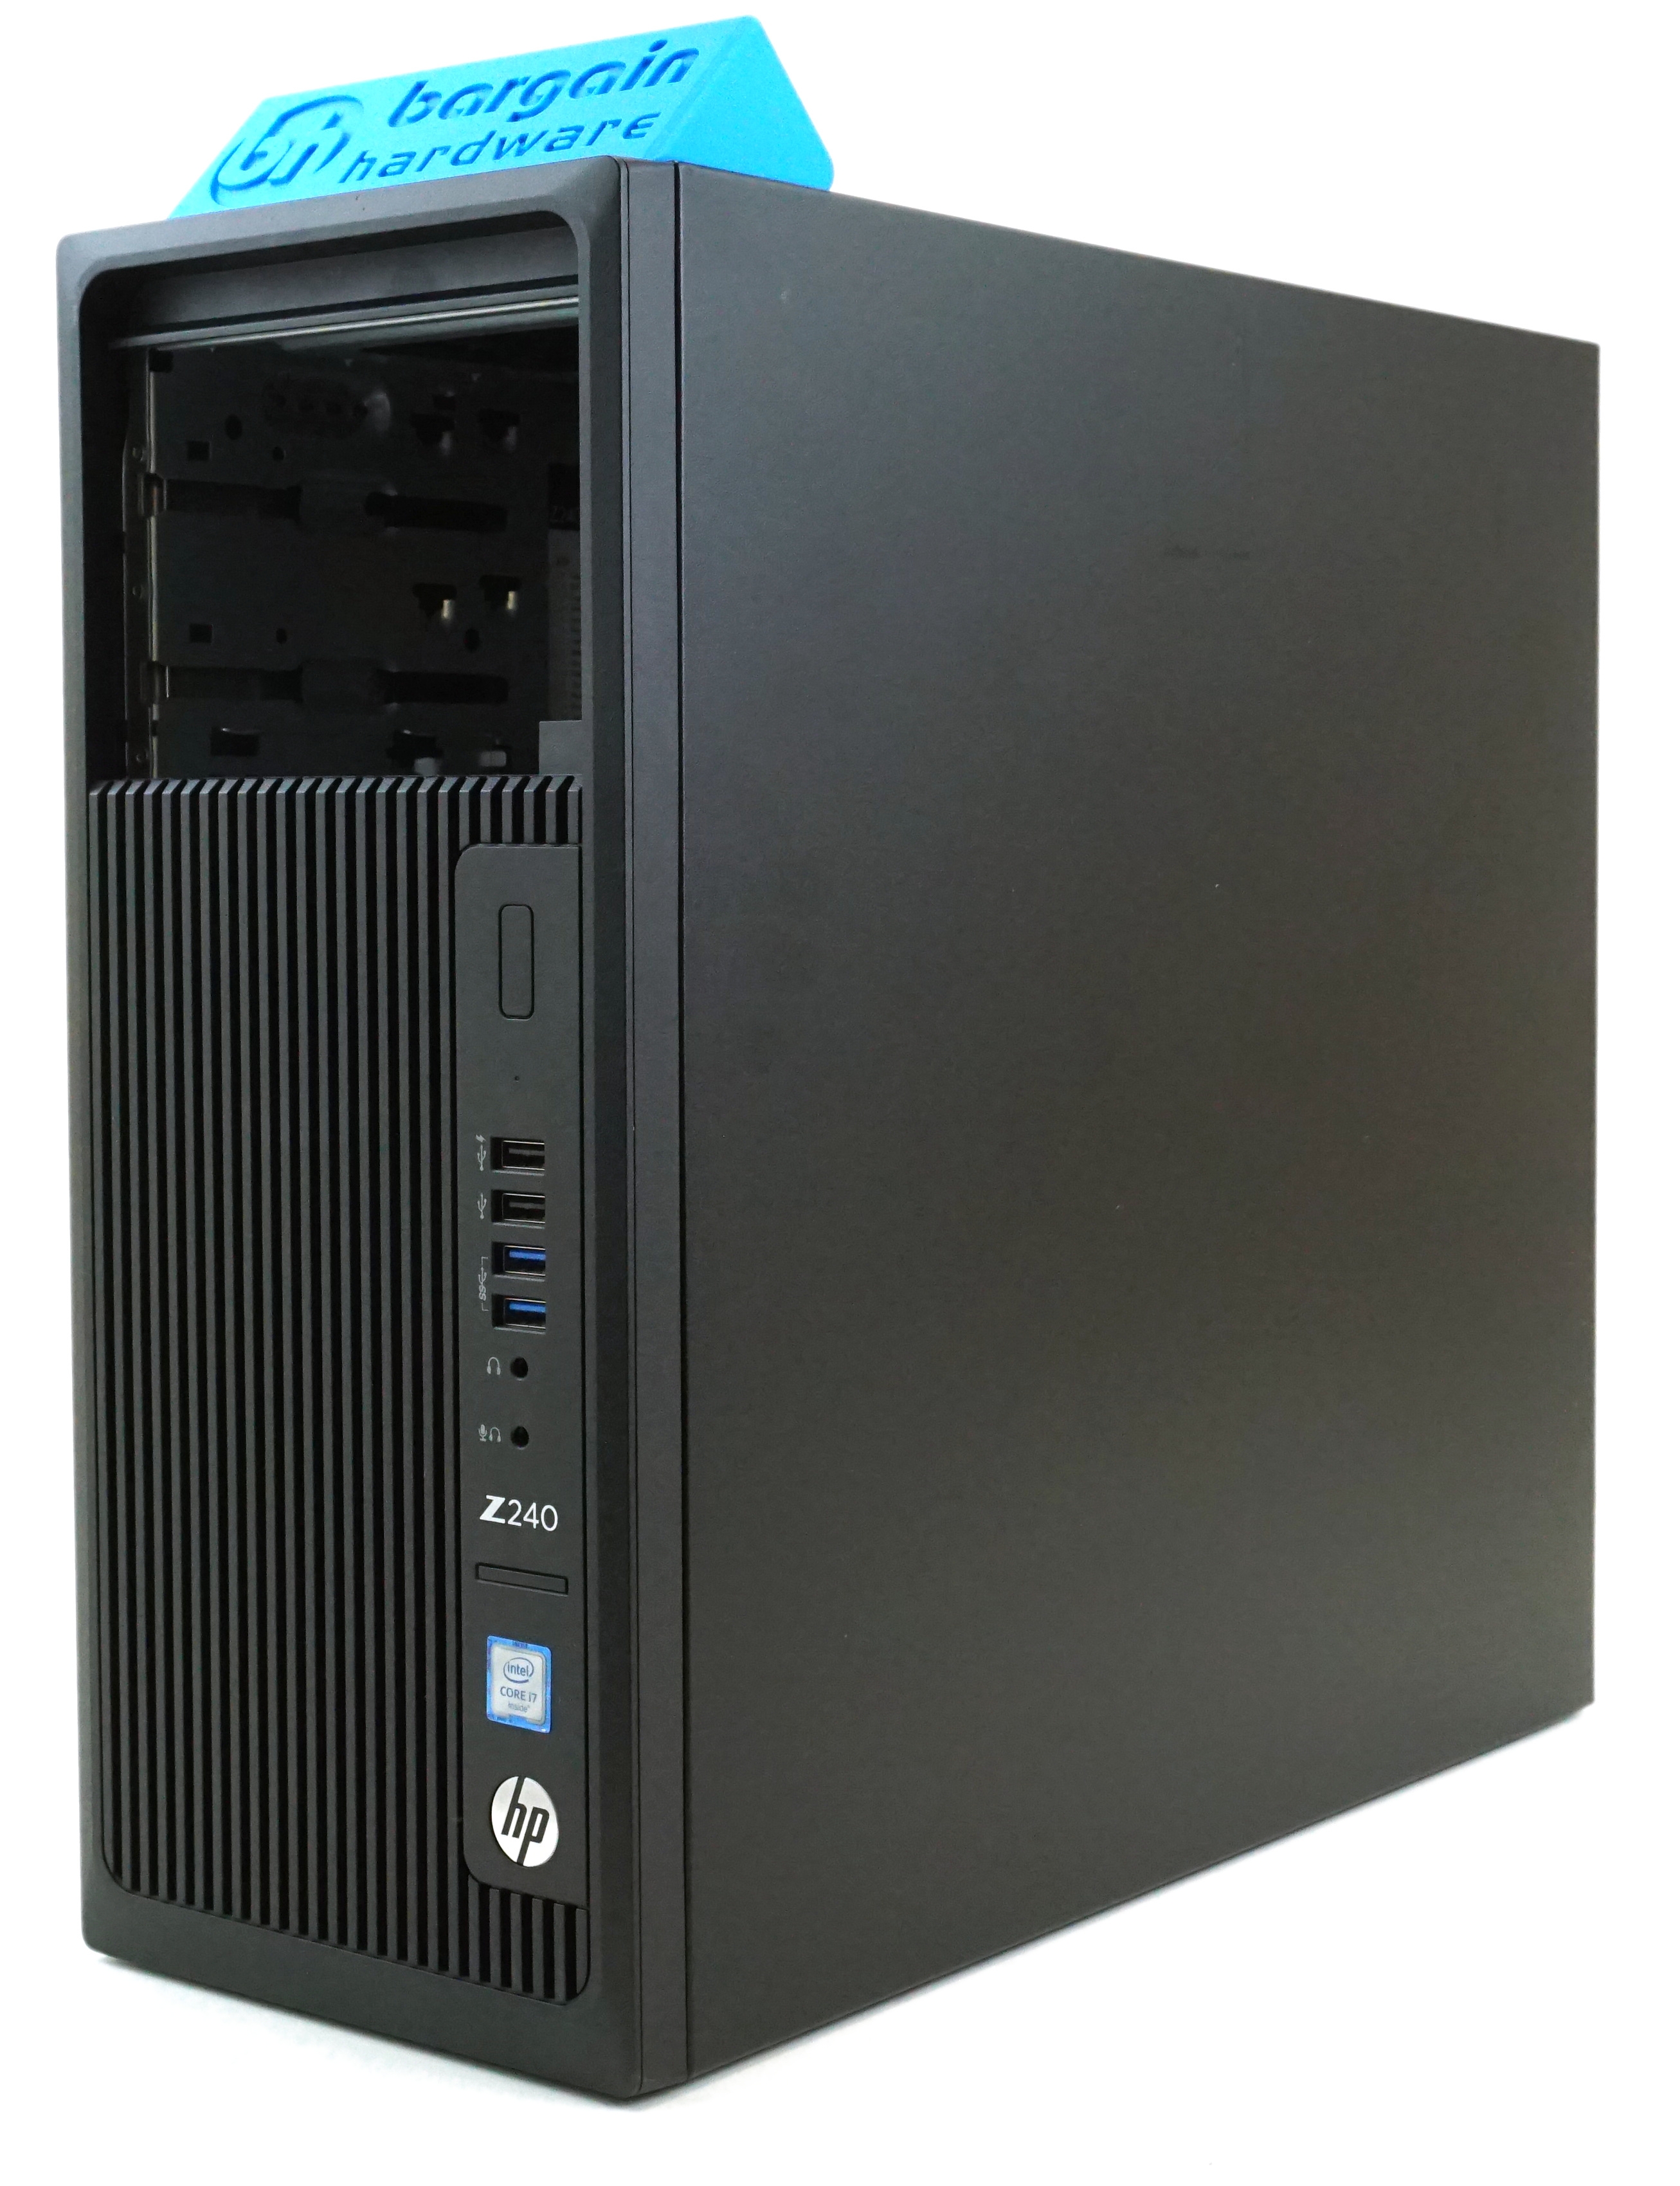 HP Z240 Workstation Configure i7-6700 3.4GHz 4C 32GB-DDR4 SSD 4GB GFX Win10 Lot